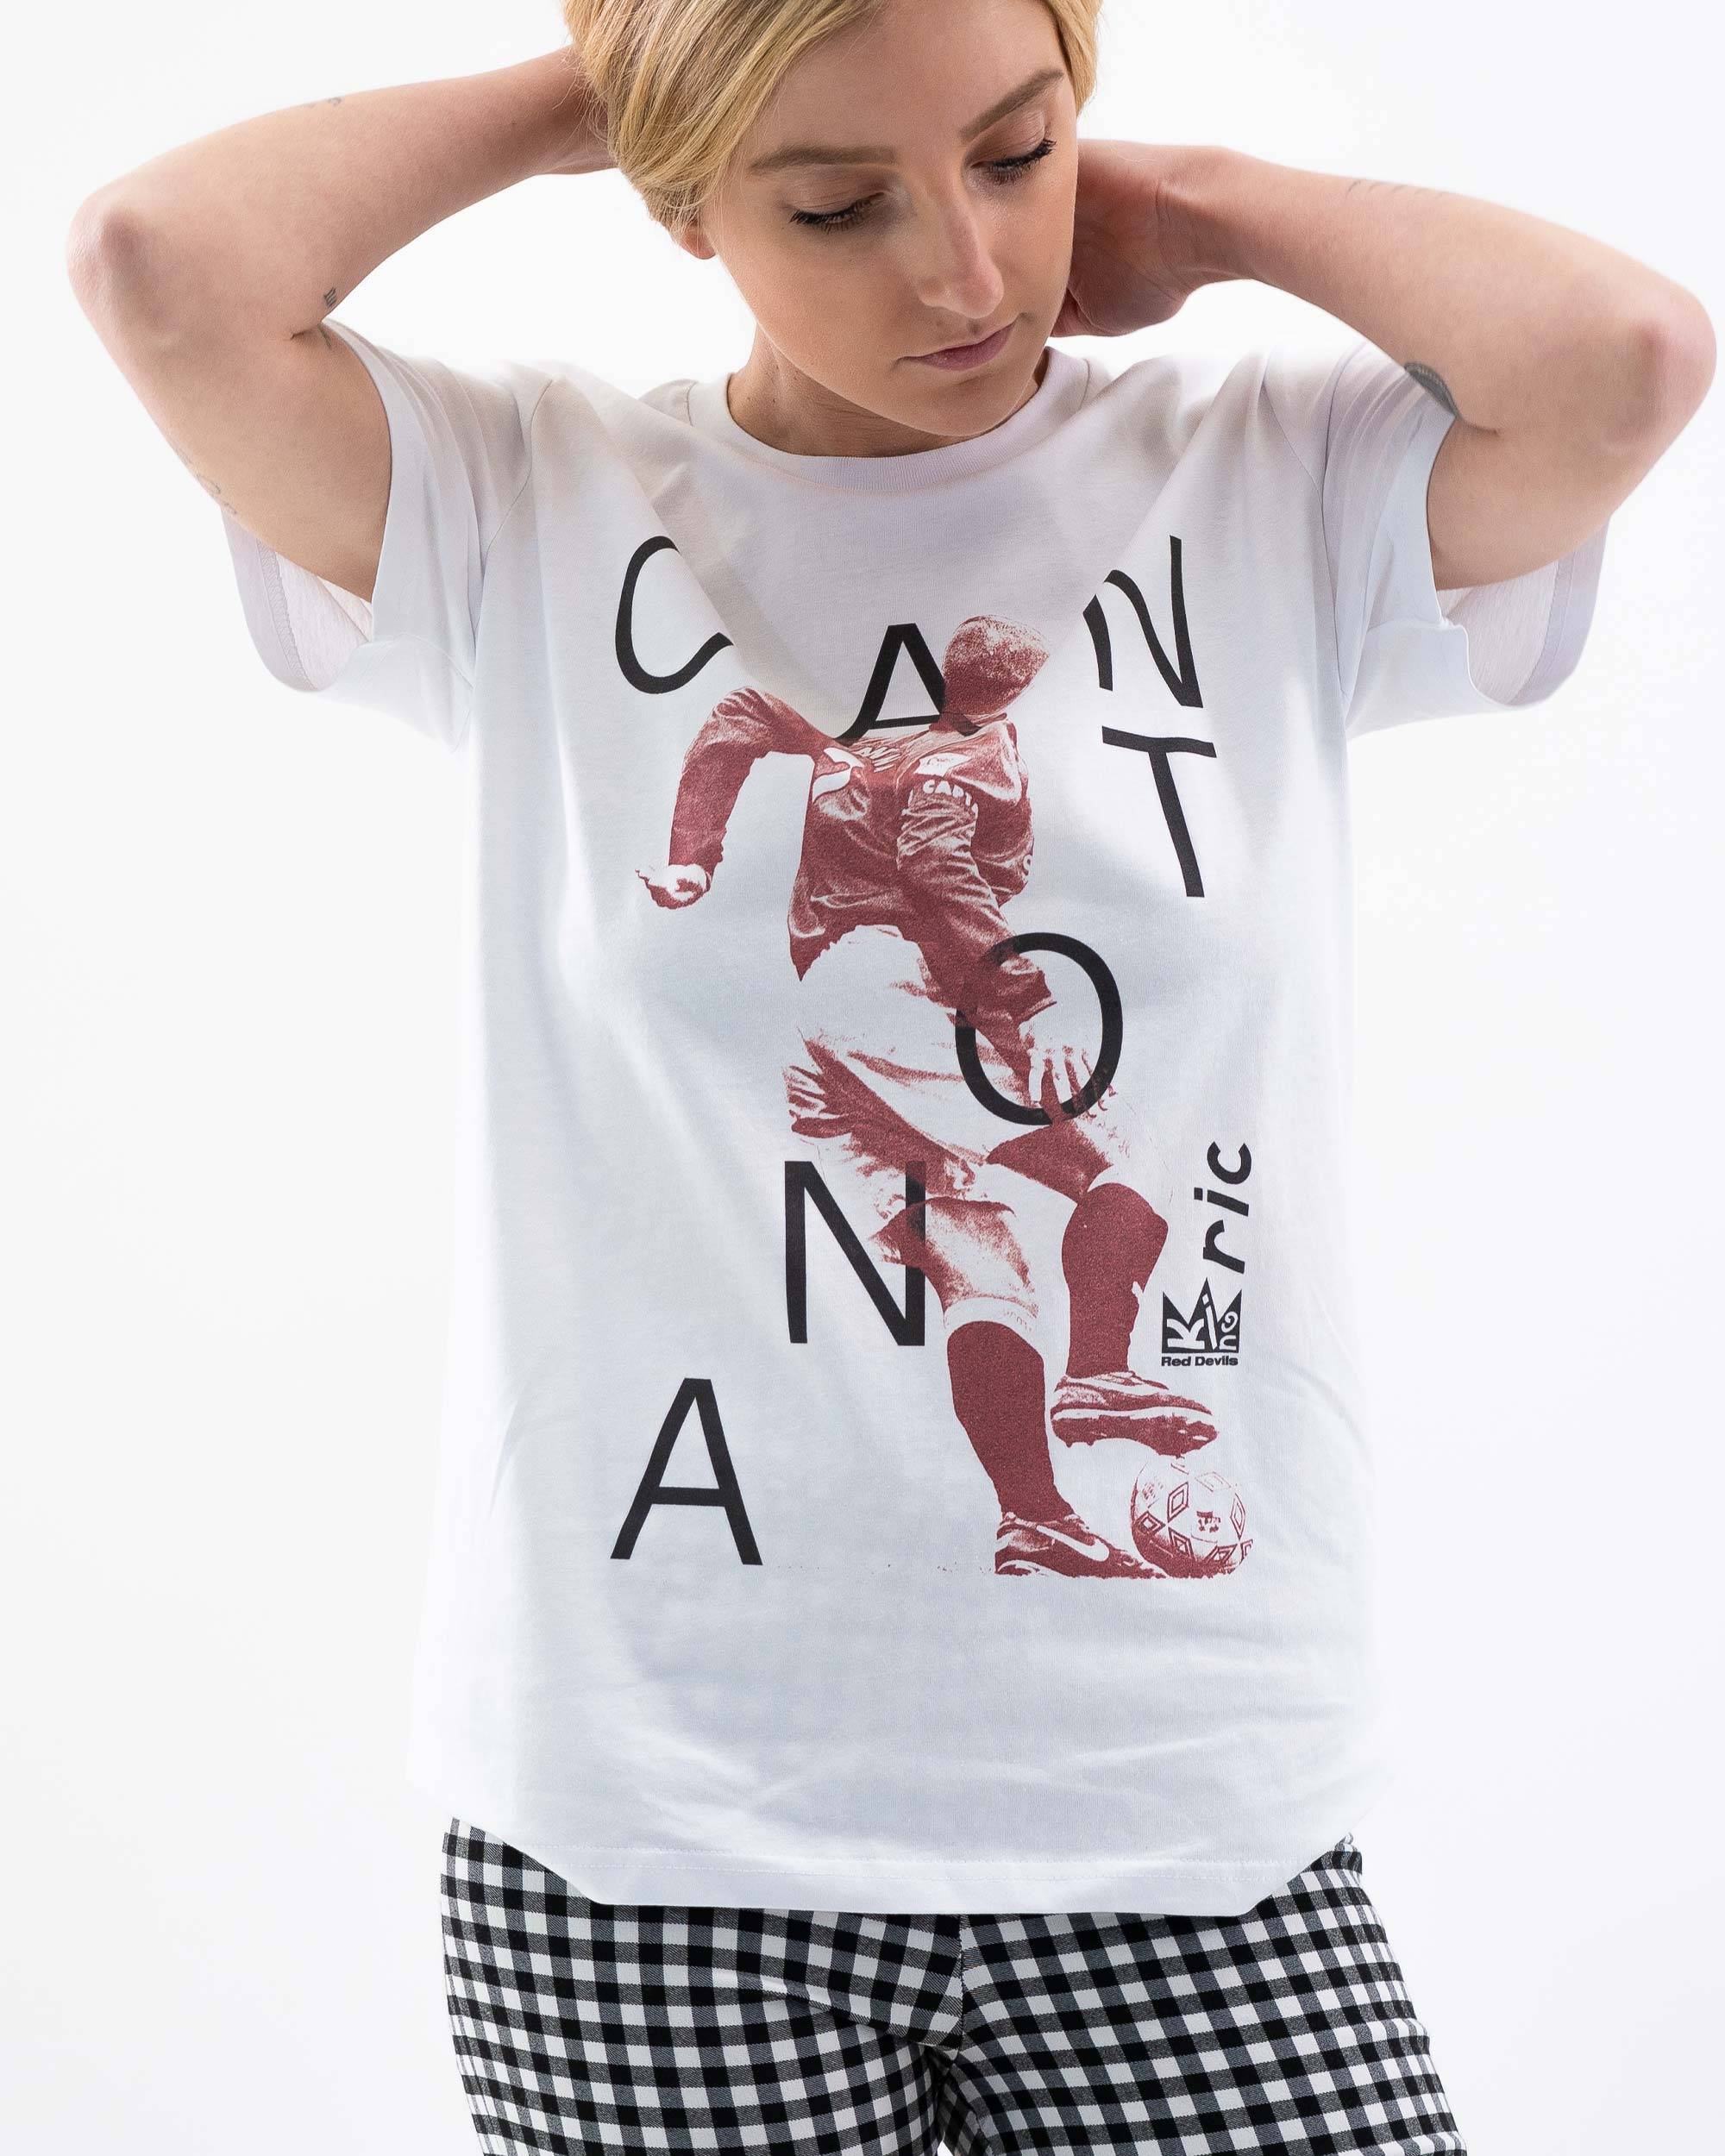 T-shirt Cantona Grafitee